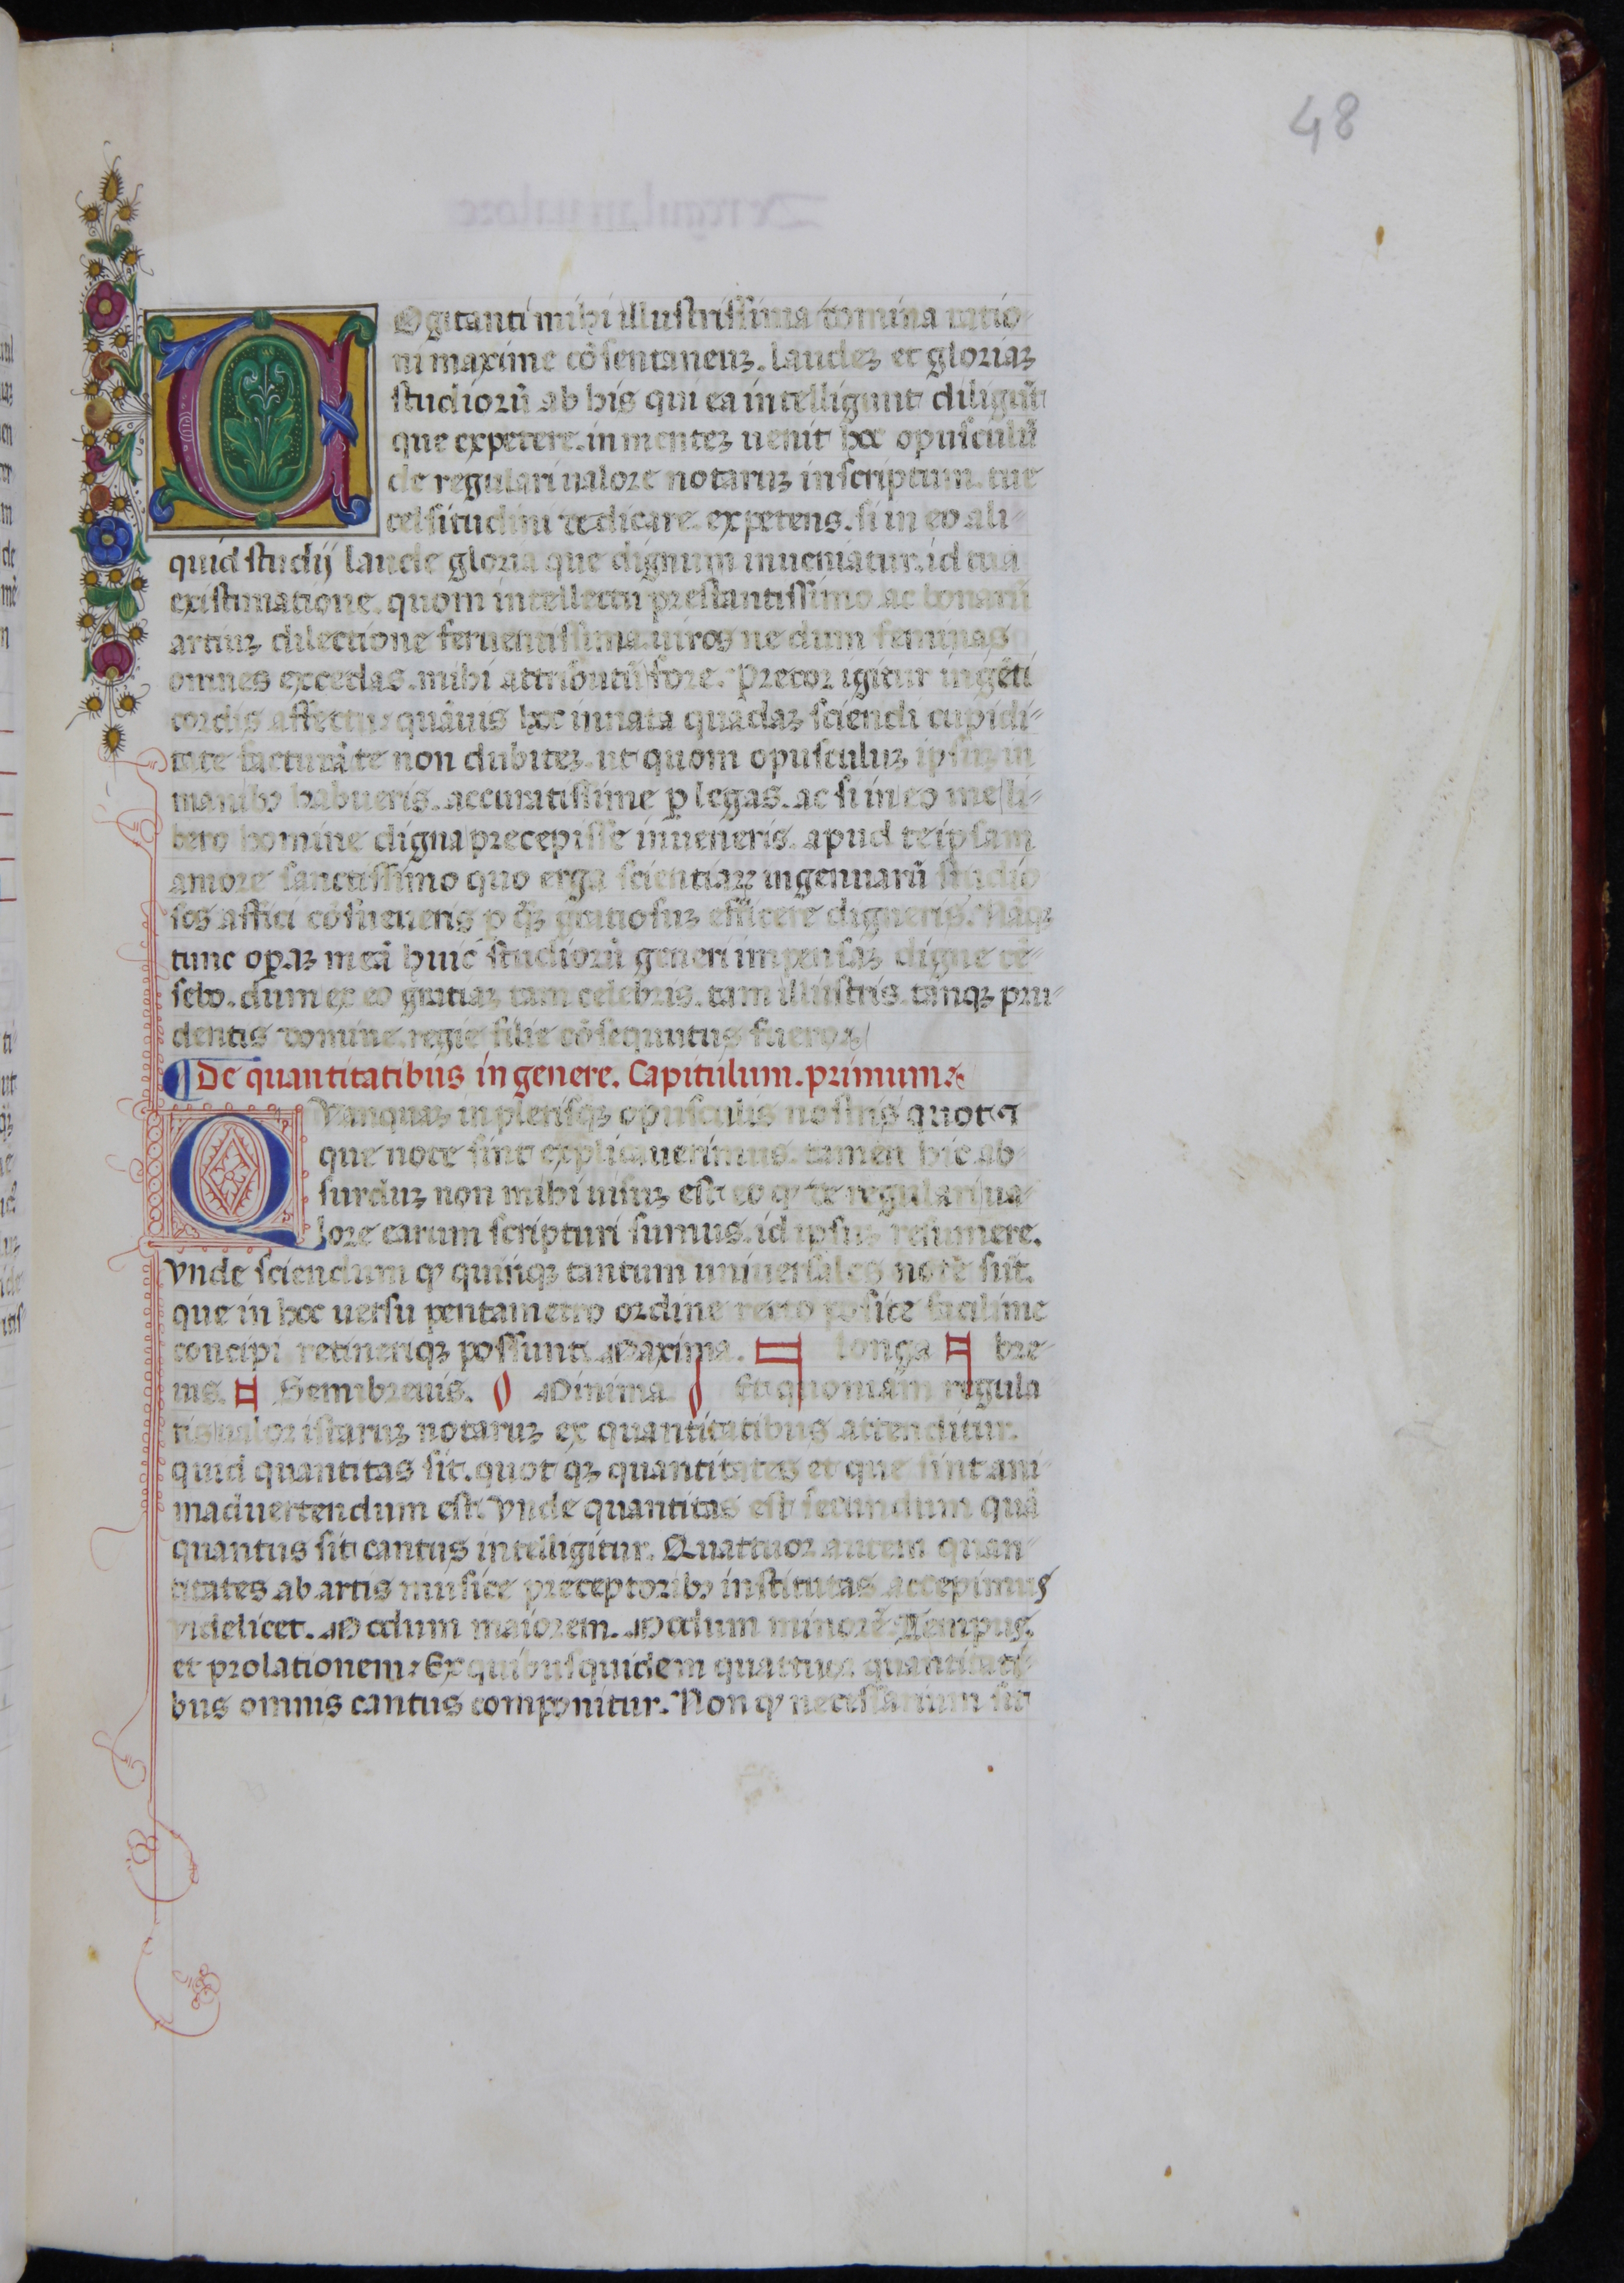 Universitat de València, Biblioteca Històrica, MS 835 [olim 844], fol. 48r. Source: Universitat de València, Biblioteca Històrica.